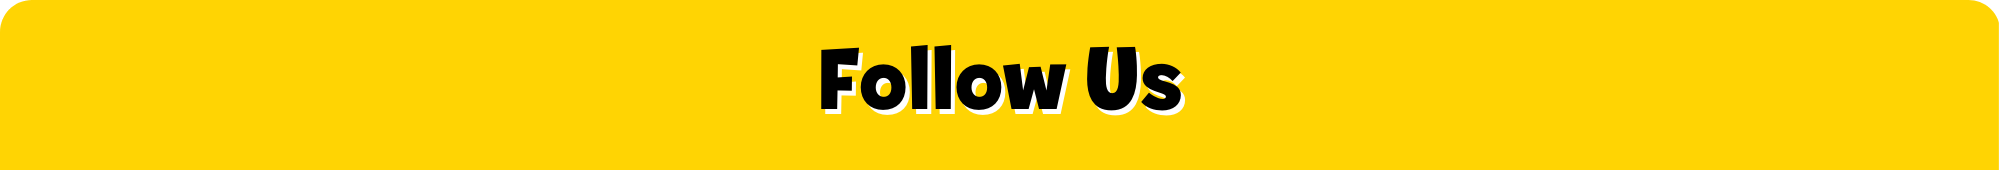 Follow Us on Yellow